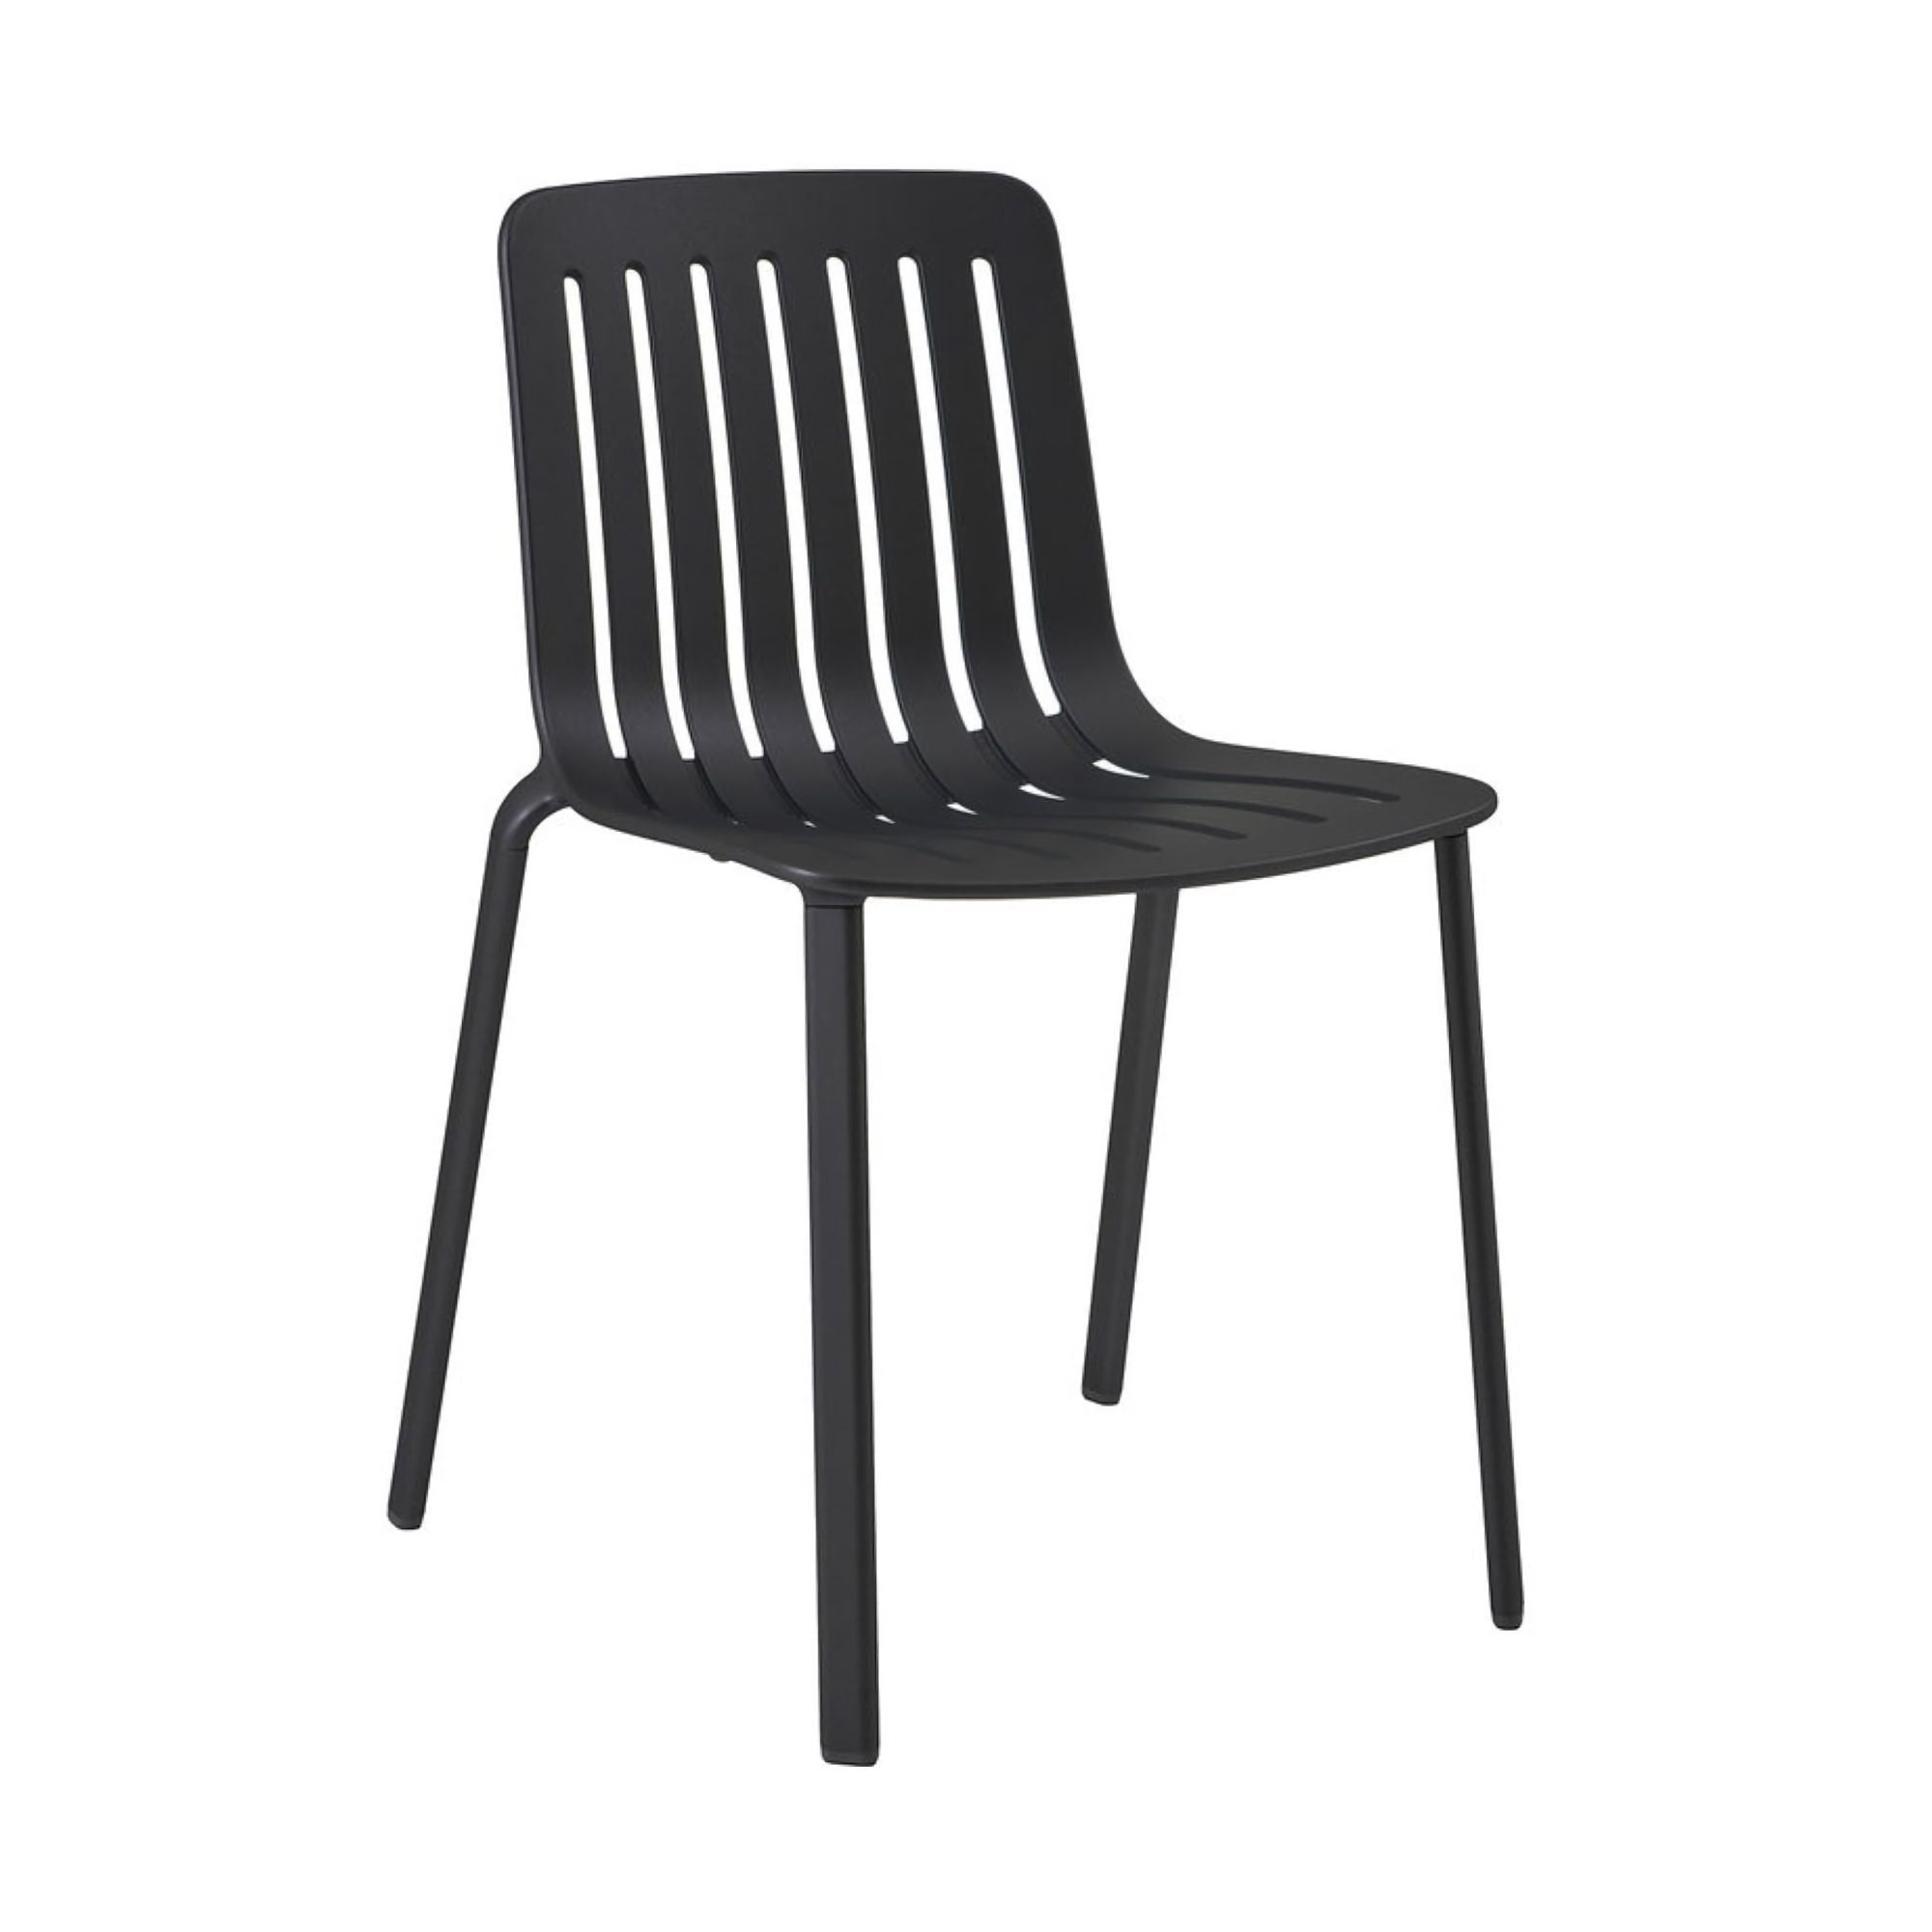 Magis Plato chair, black (outdoor)